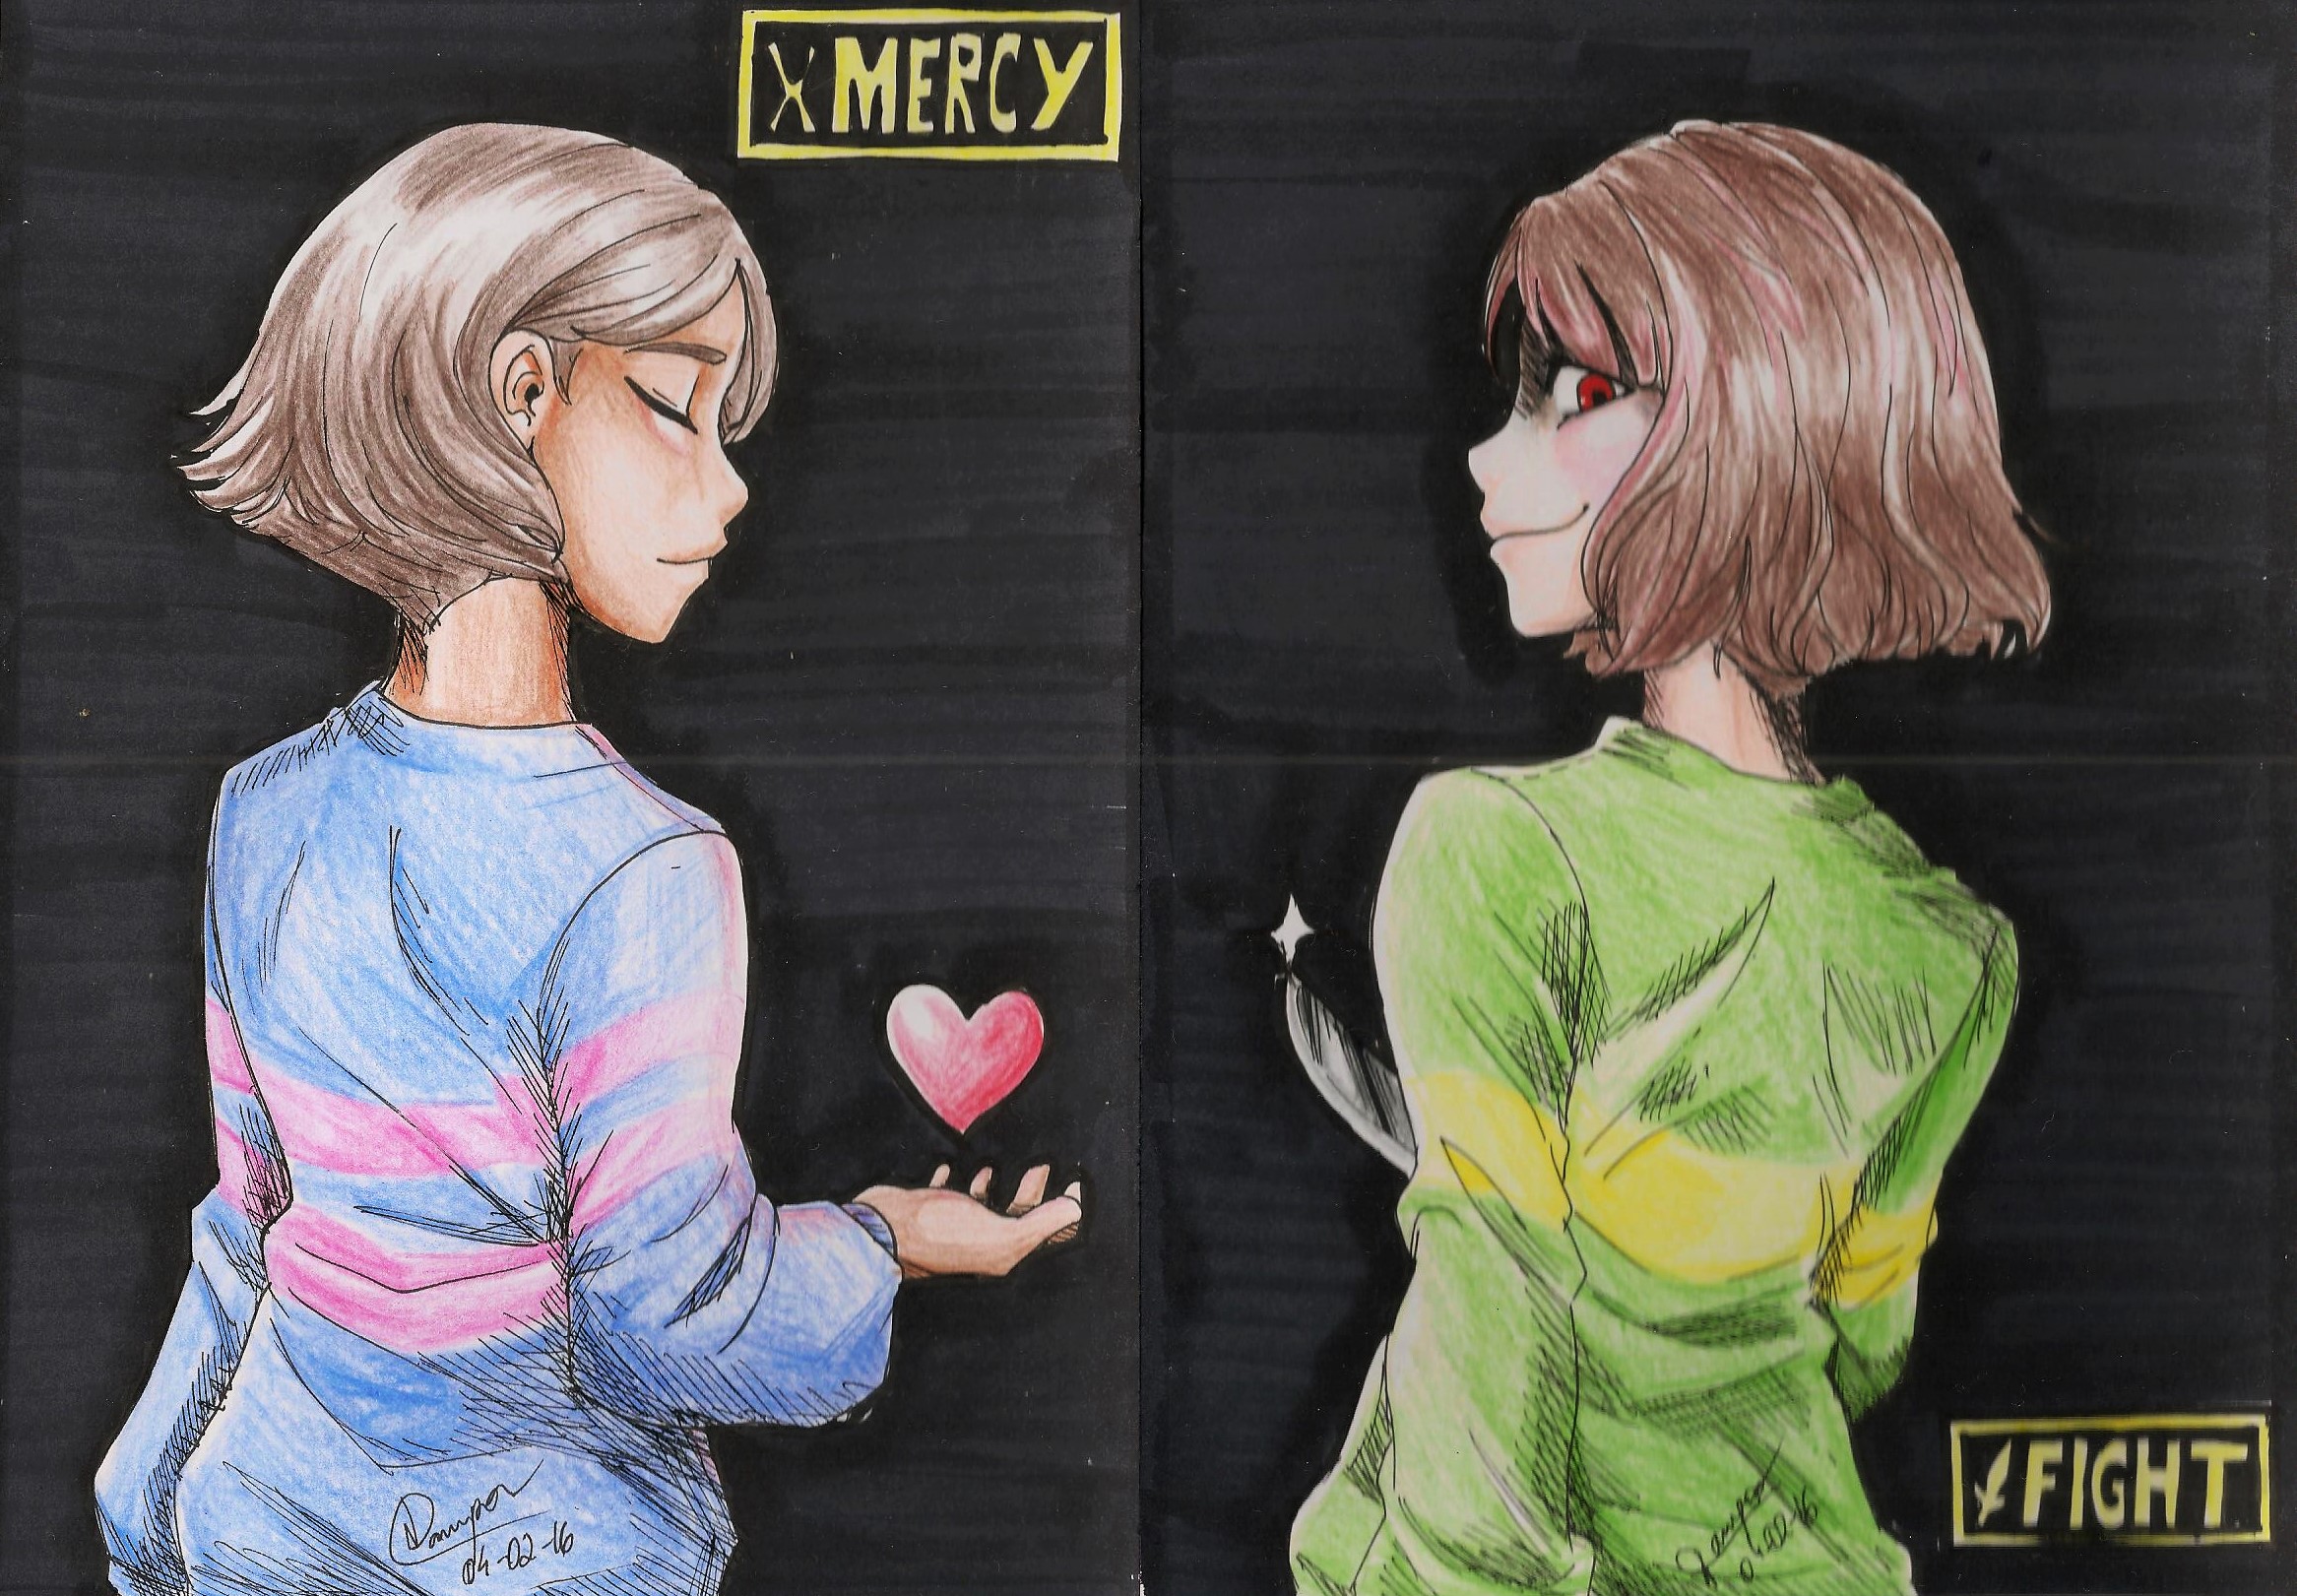 Undertale - Flowey: Mercy or Fight ? by MrDragonboy96 on DeviantArt